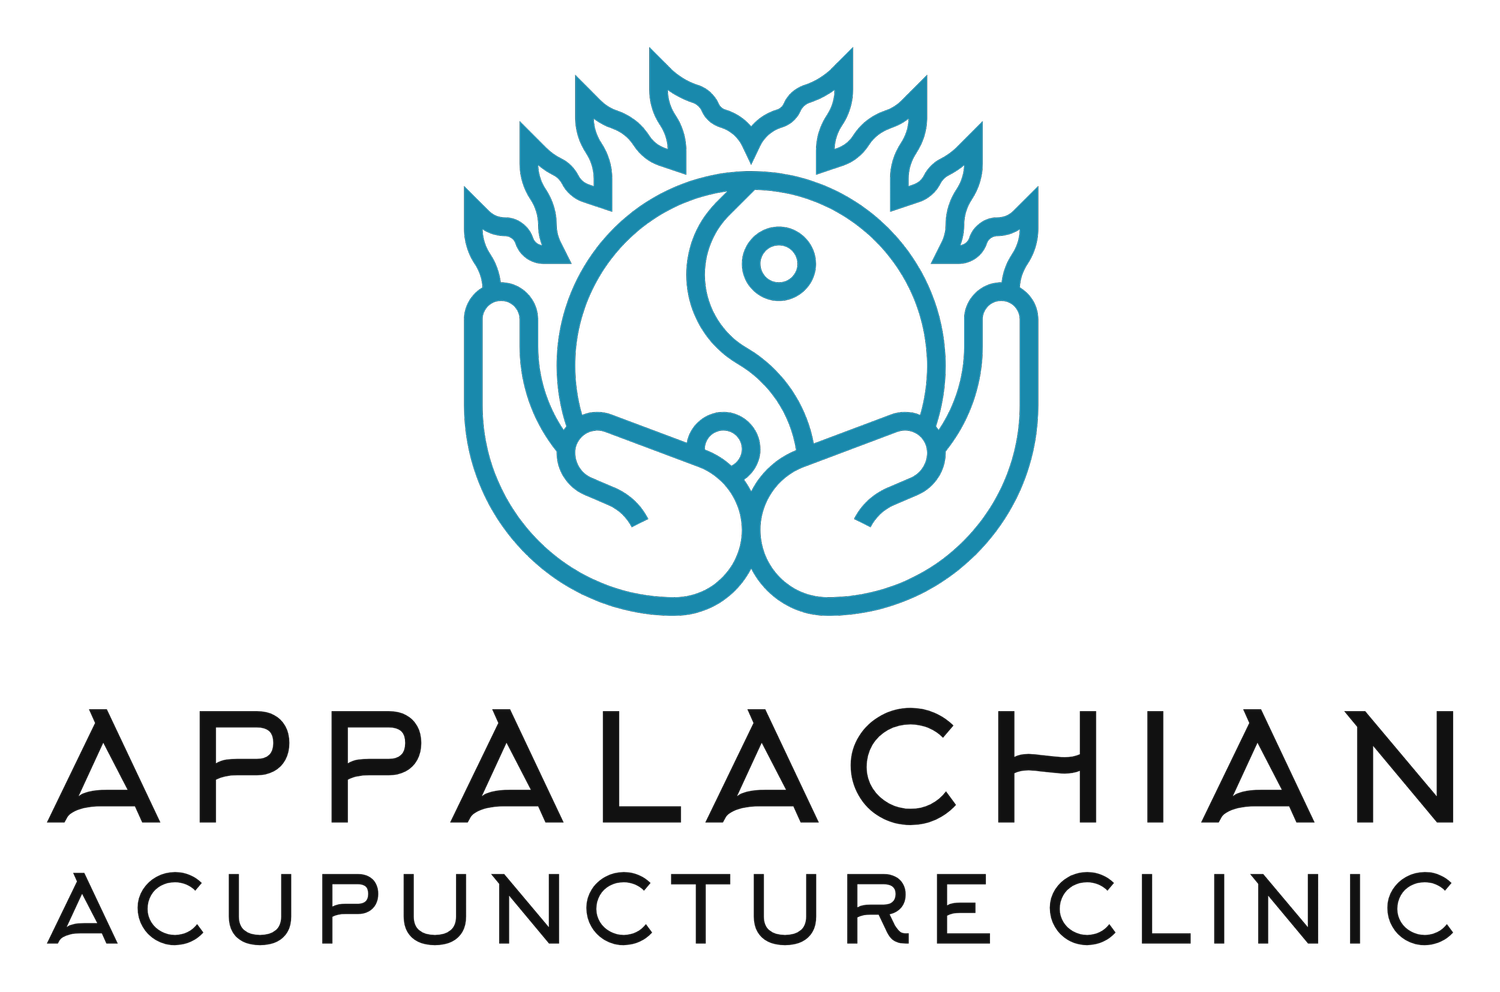 Appalachian Acupuncture Clinic